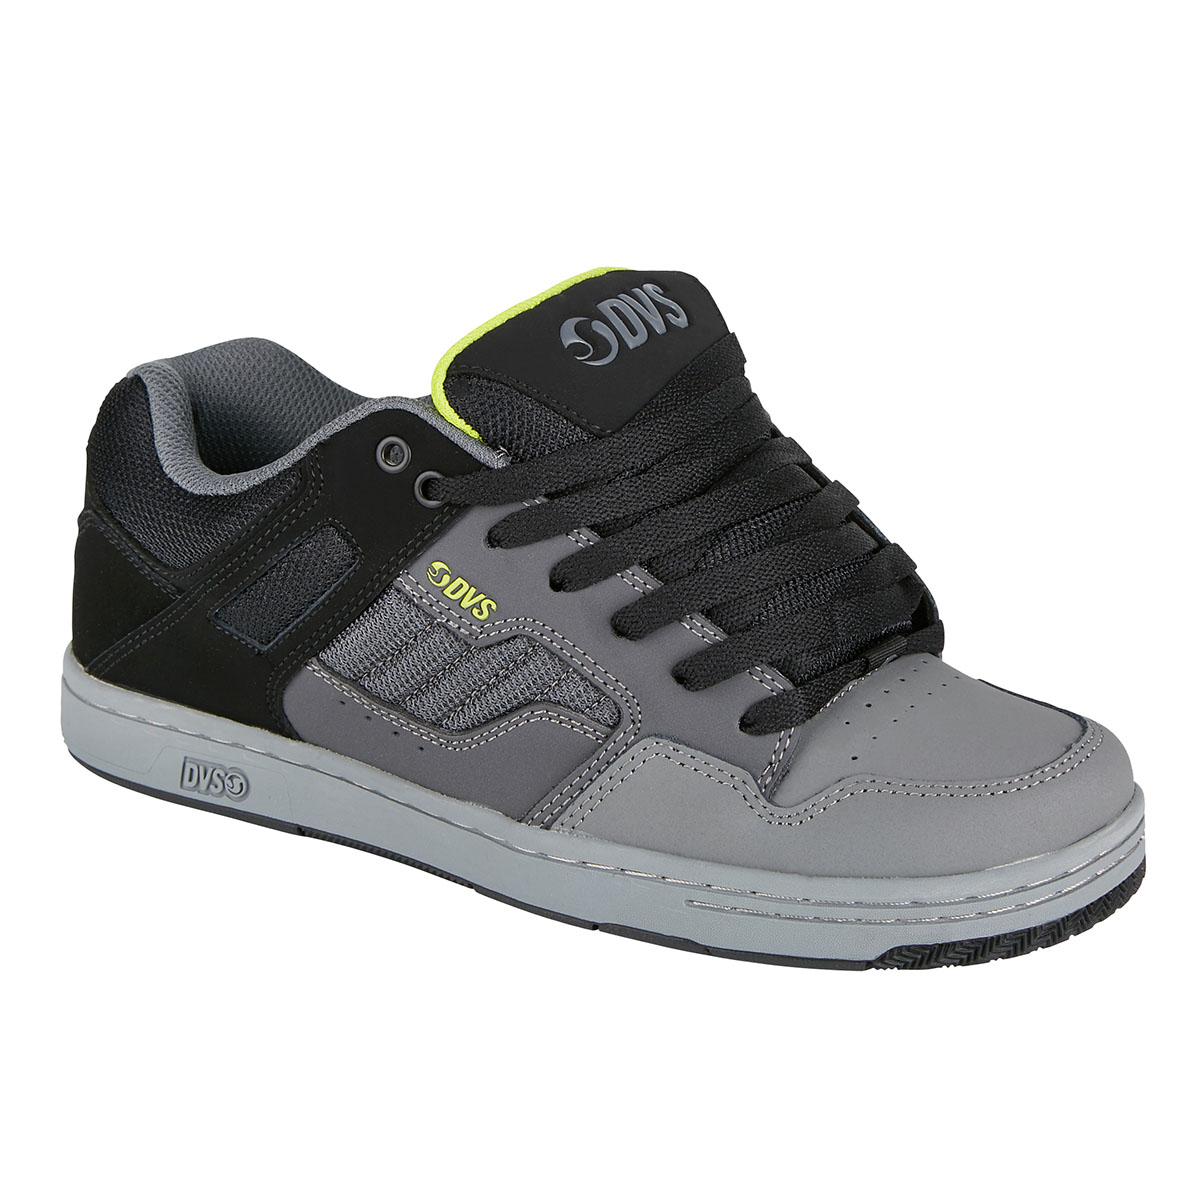 DVS Schuhe Enduro 125 Charcoal Black Nubuck